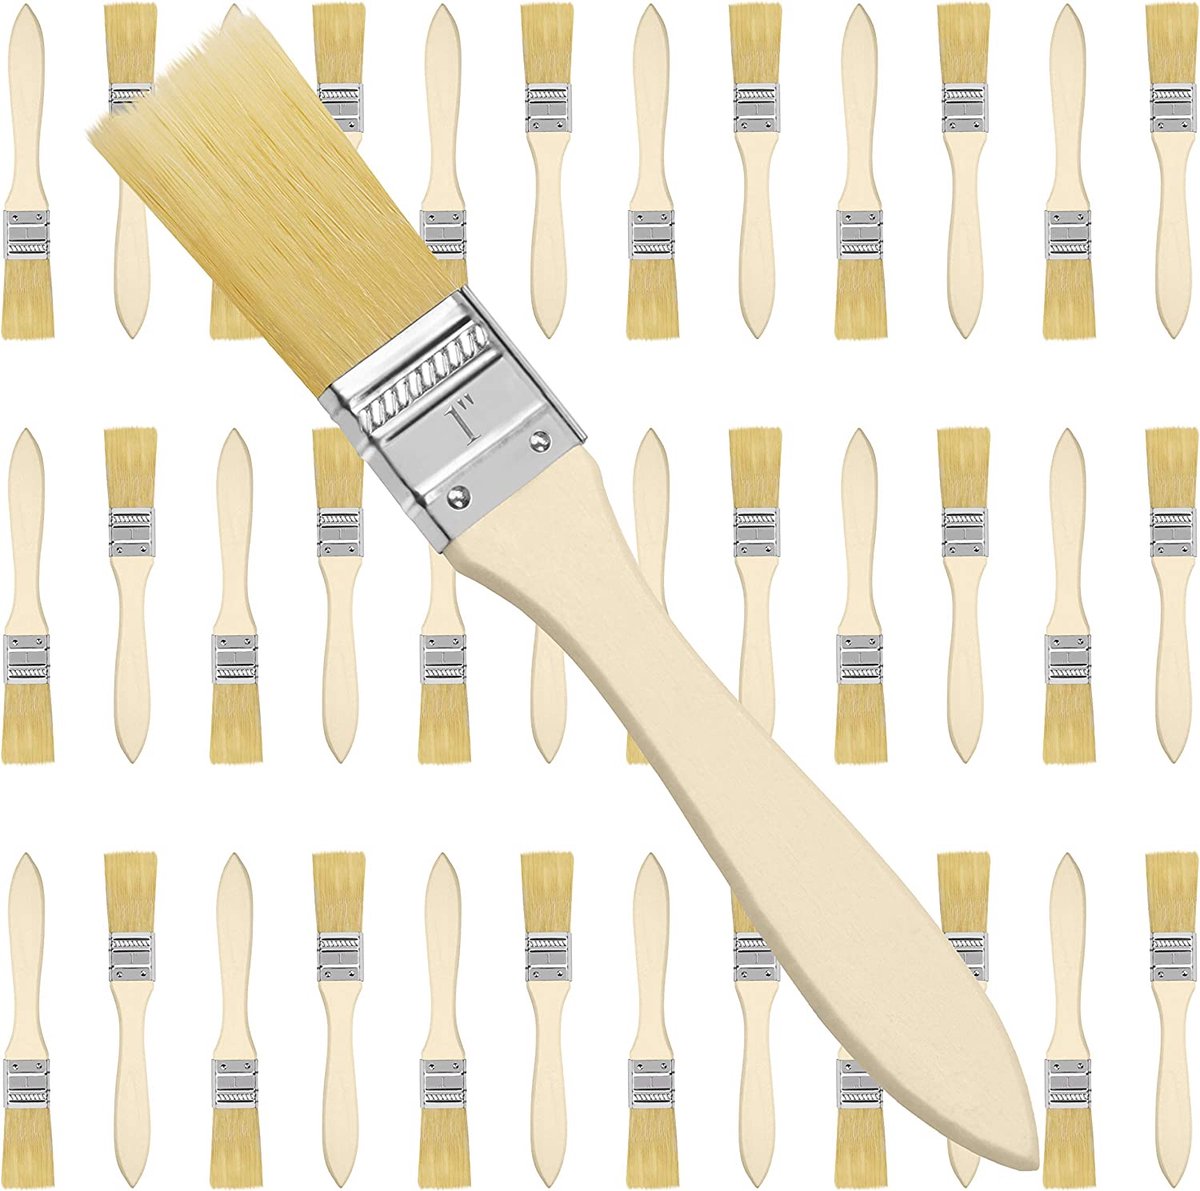 Verf Kwasten - verfroller - Acrylverven -aint brush roll - paint stuff - Verf Borstels Set - Paint Brushes Set 36